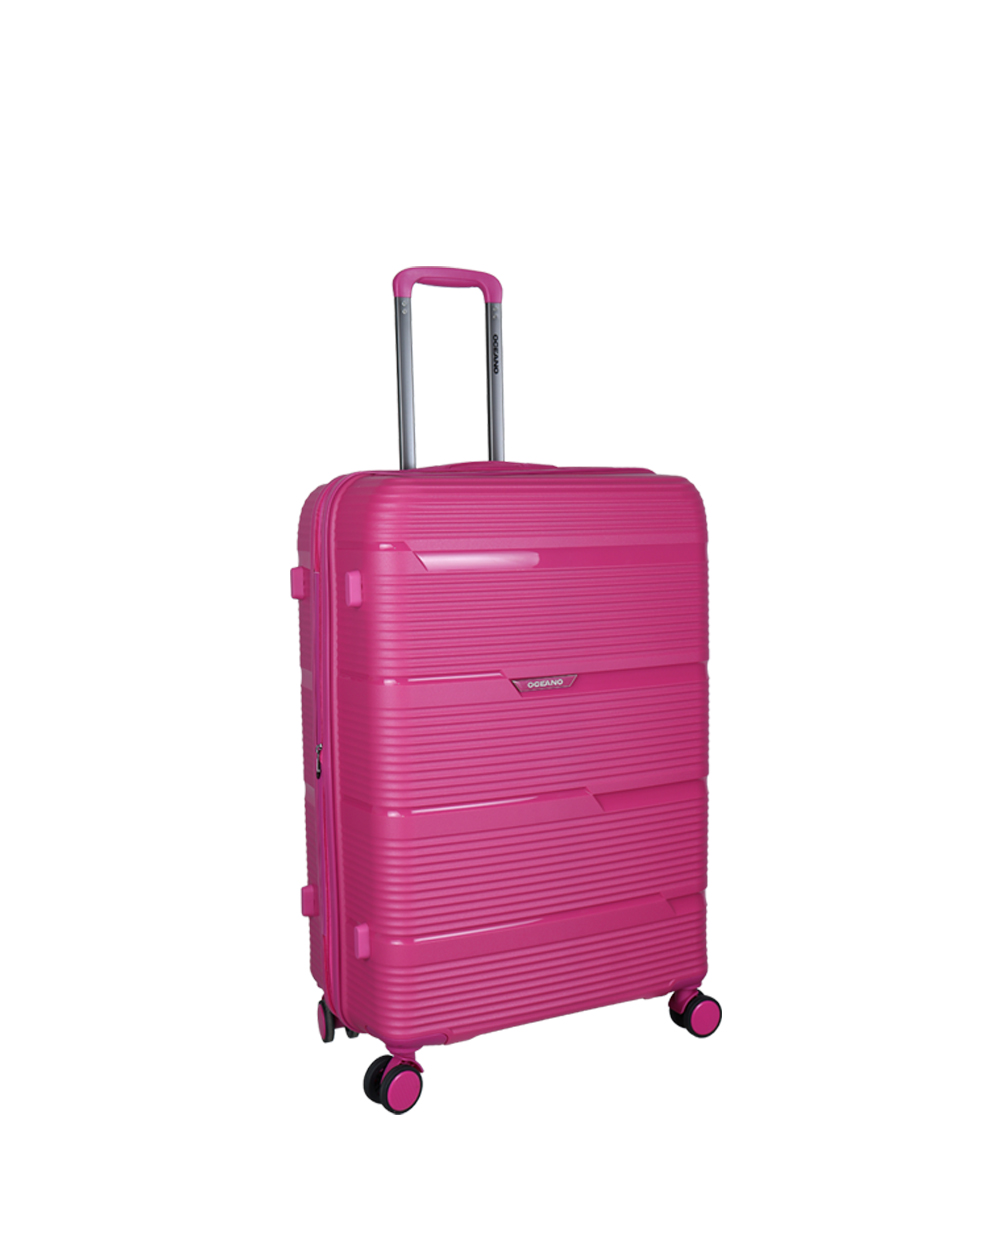 Comprar Linex maleta mediana spinner 4 ruedas 66cm watermelon pink